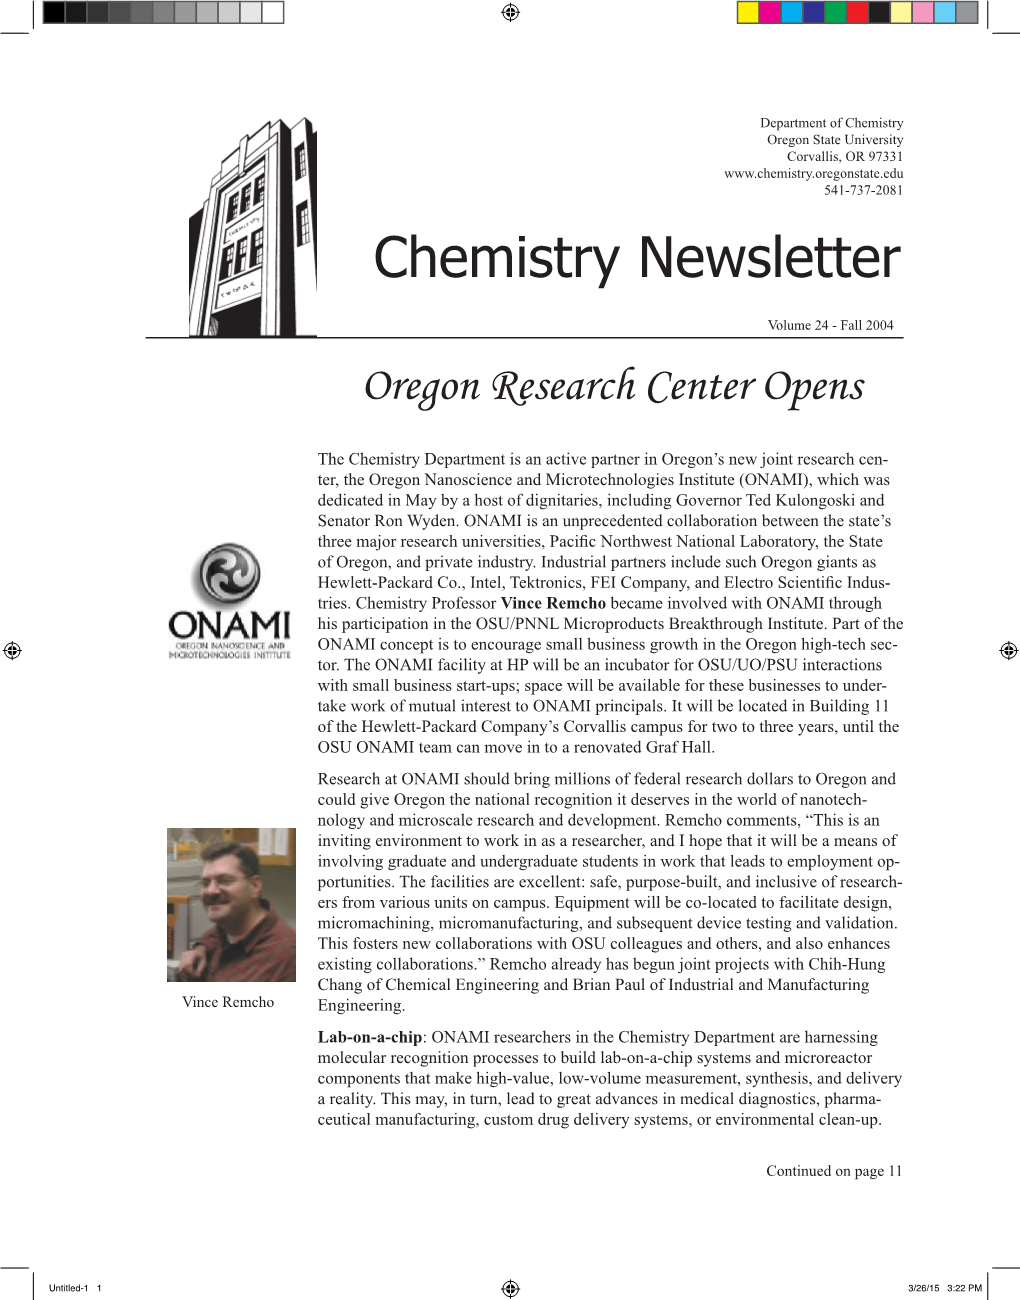 Chem Newsletter Fall 04.Pdf